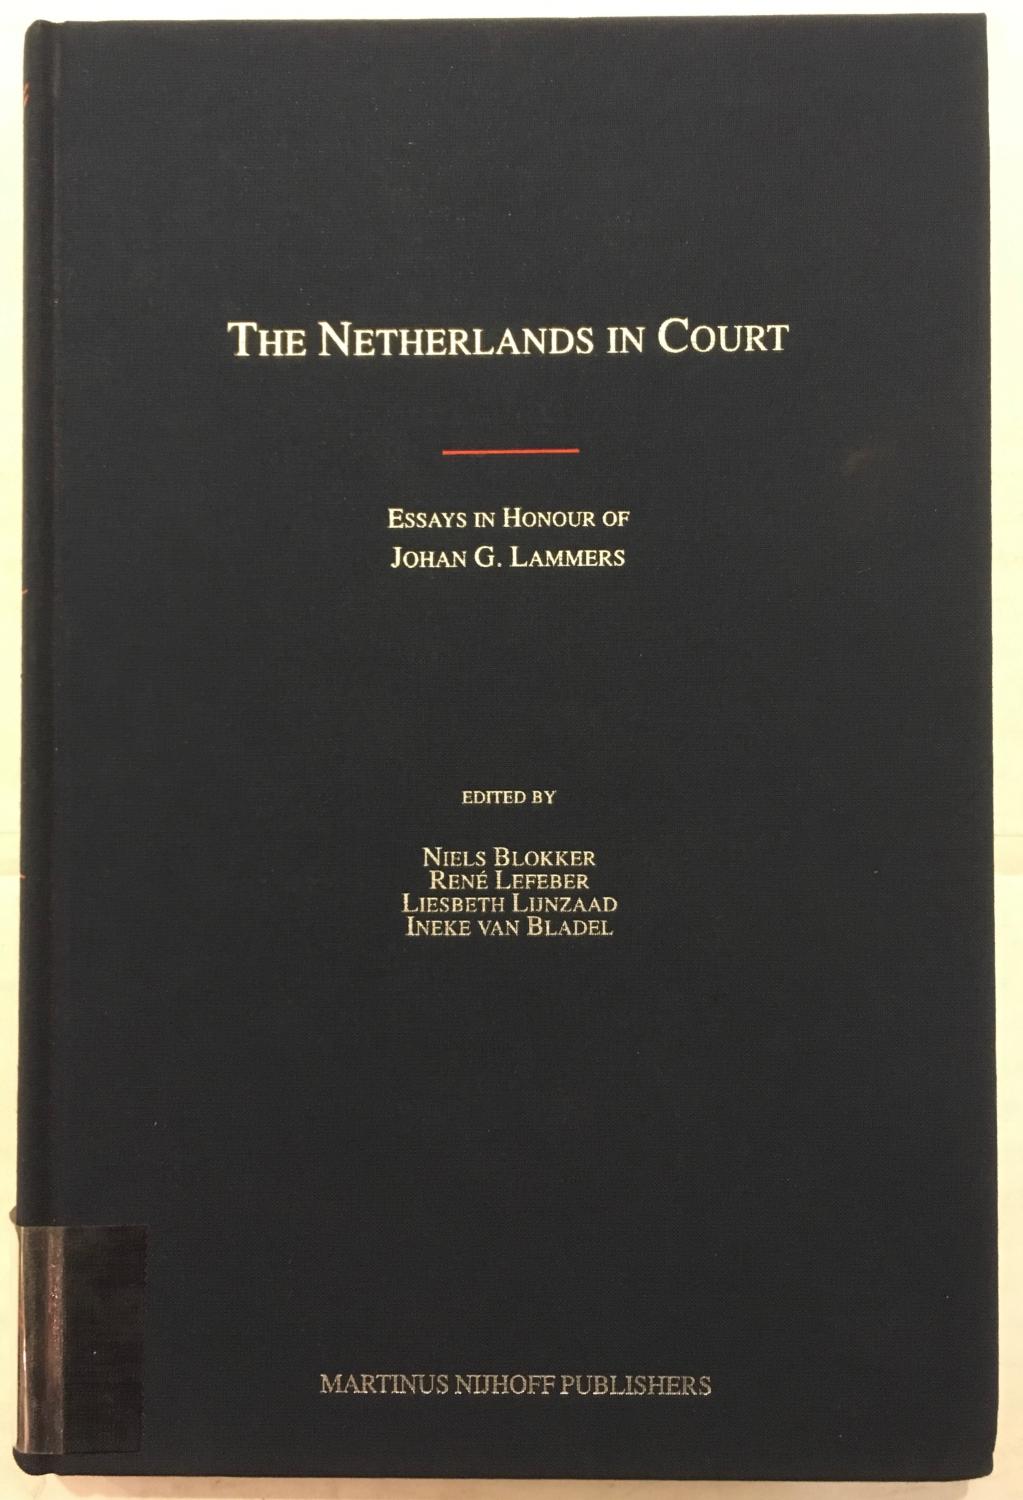 The Netherlands in Court: Essays in Honour of Johan G. Lammers - Niels Blokker; J G Lammers (eds.)